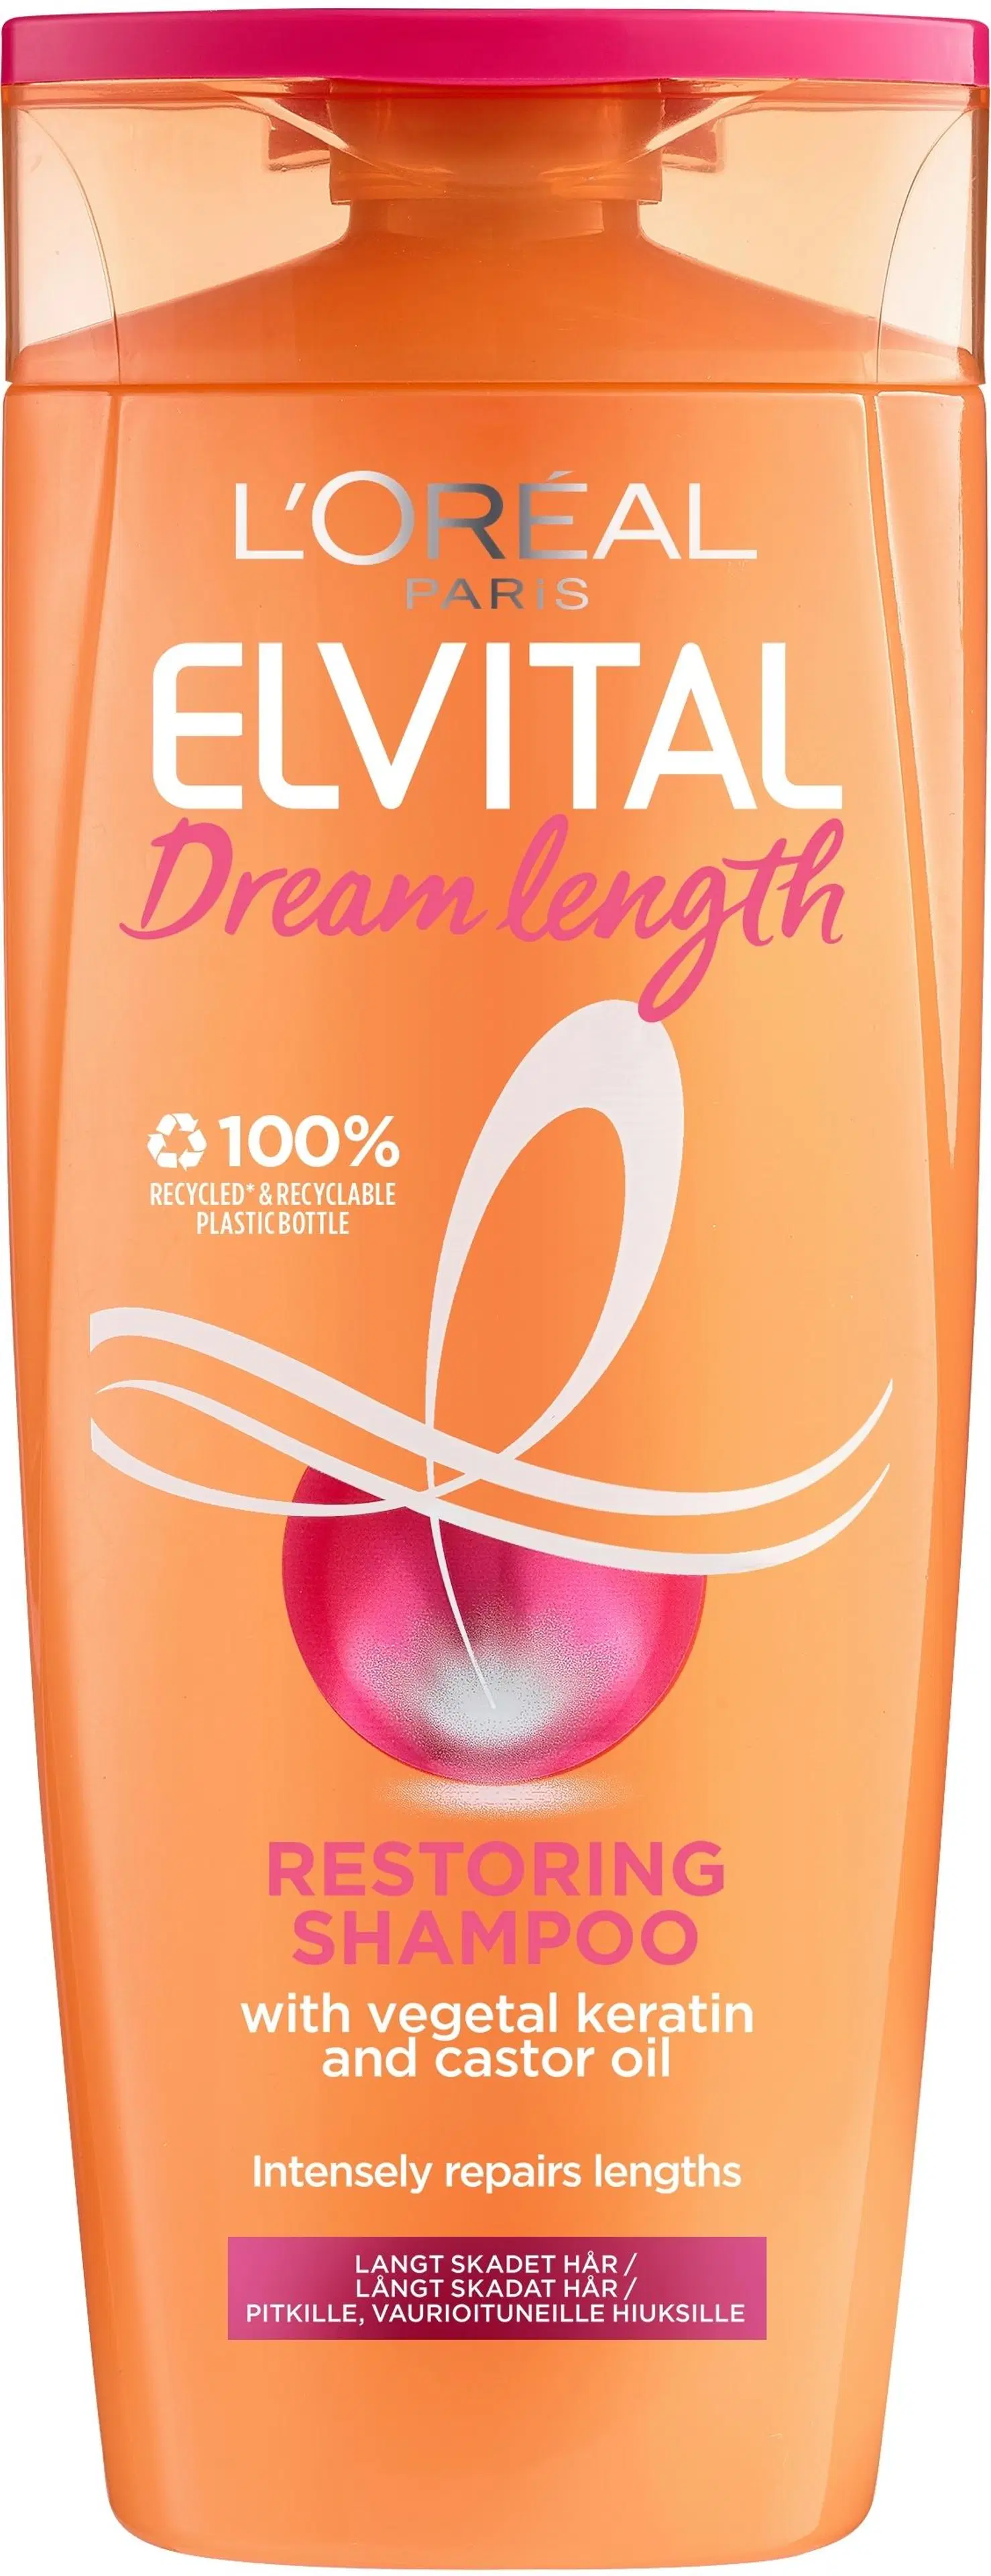 L'Oréal Paris Elvital Dream Length Restoring shampoo pitkille, vaurioituneille hiuksille 250ml